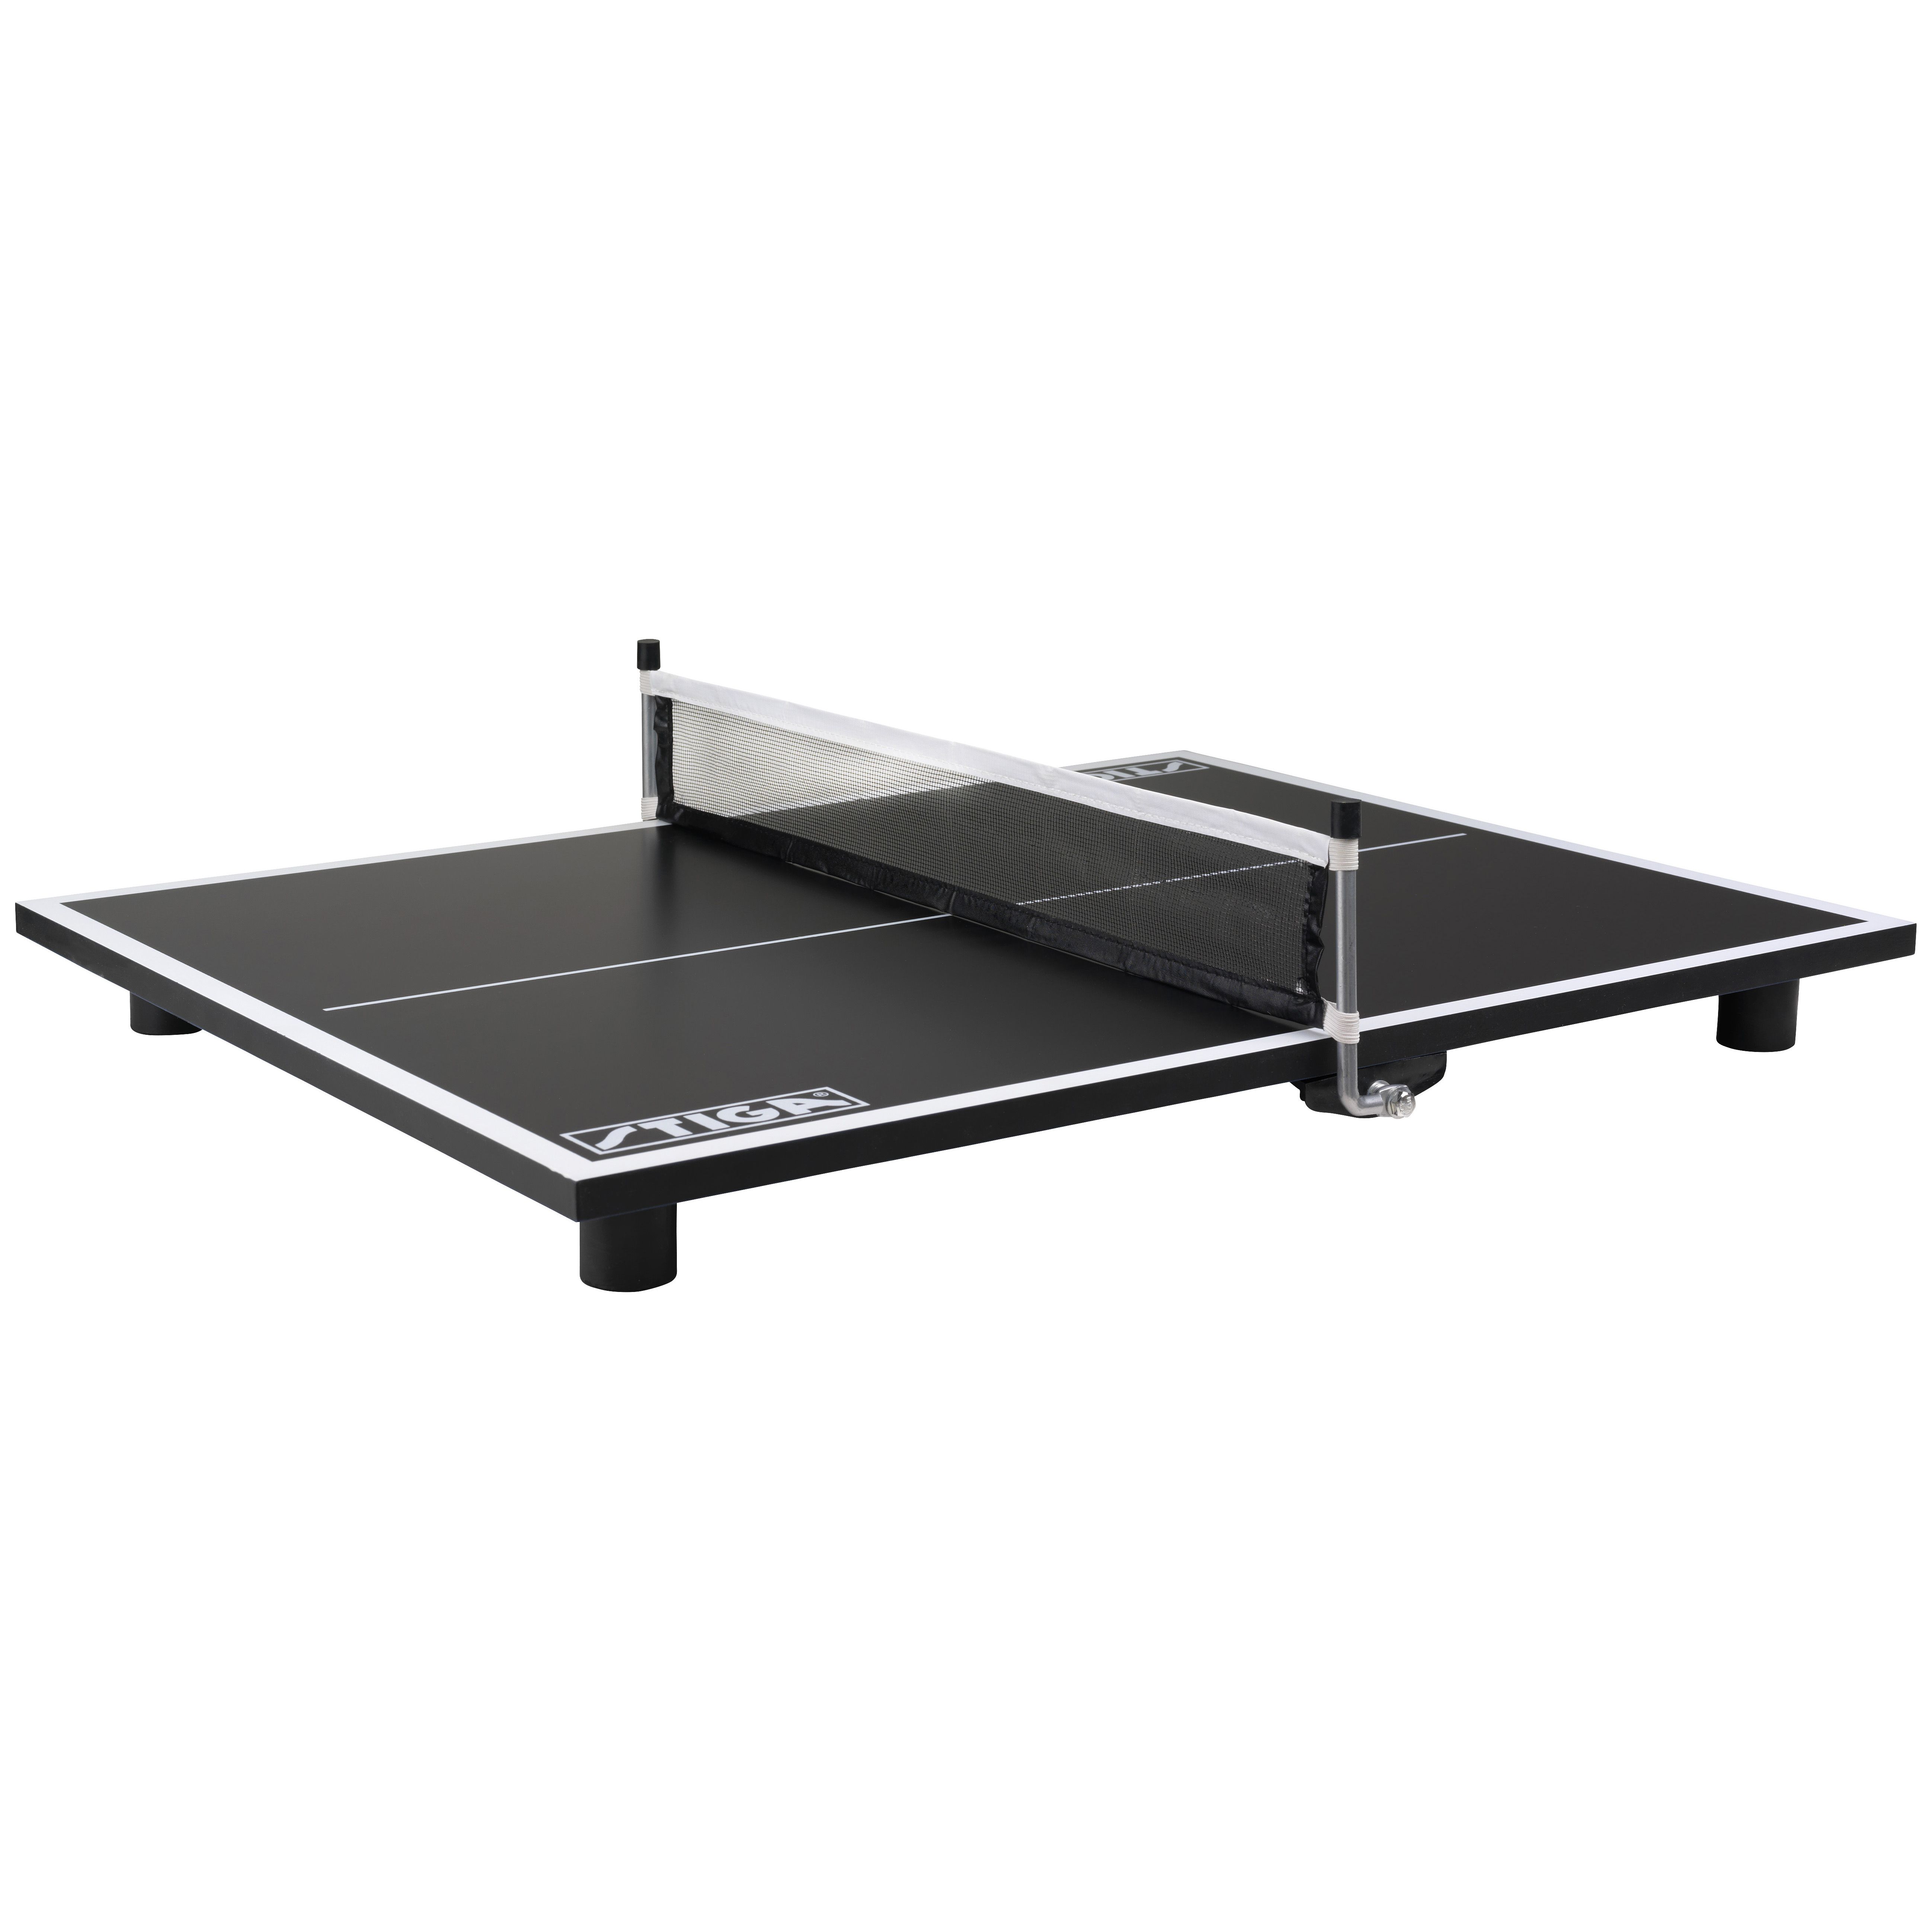 Stiga - Super Mini Table Tennis Table - Black (715800)